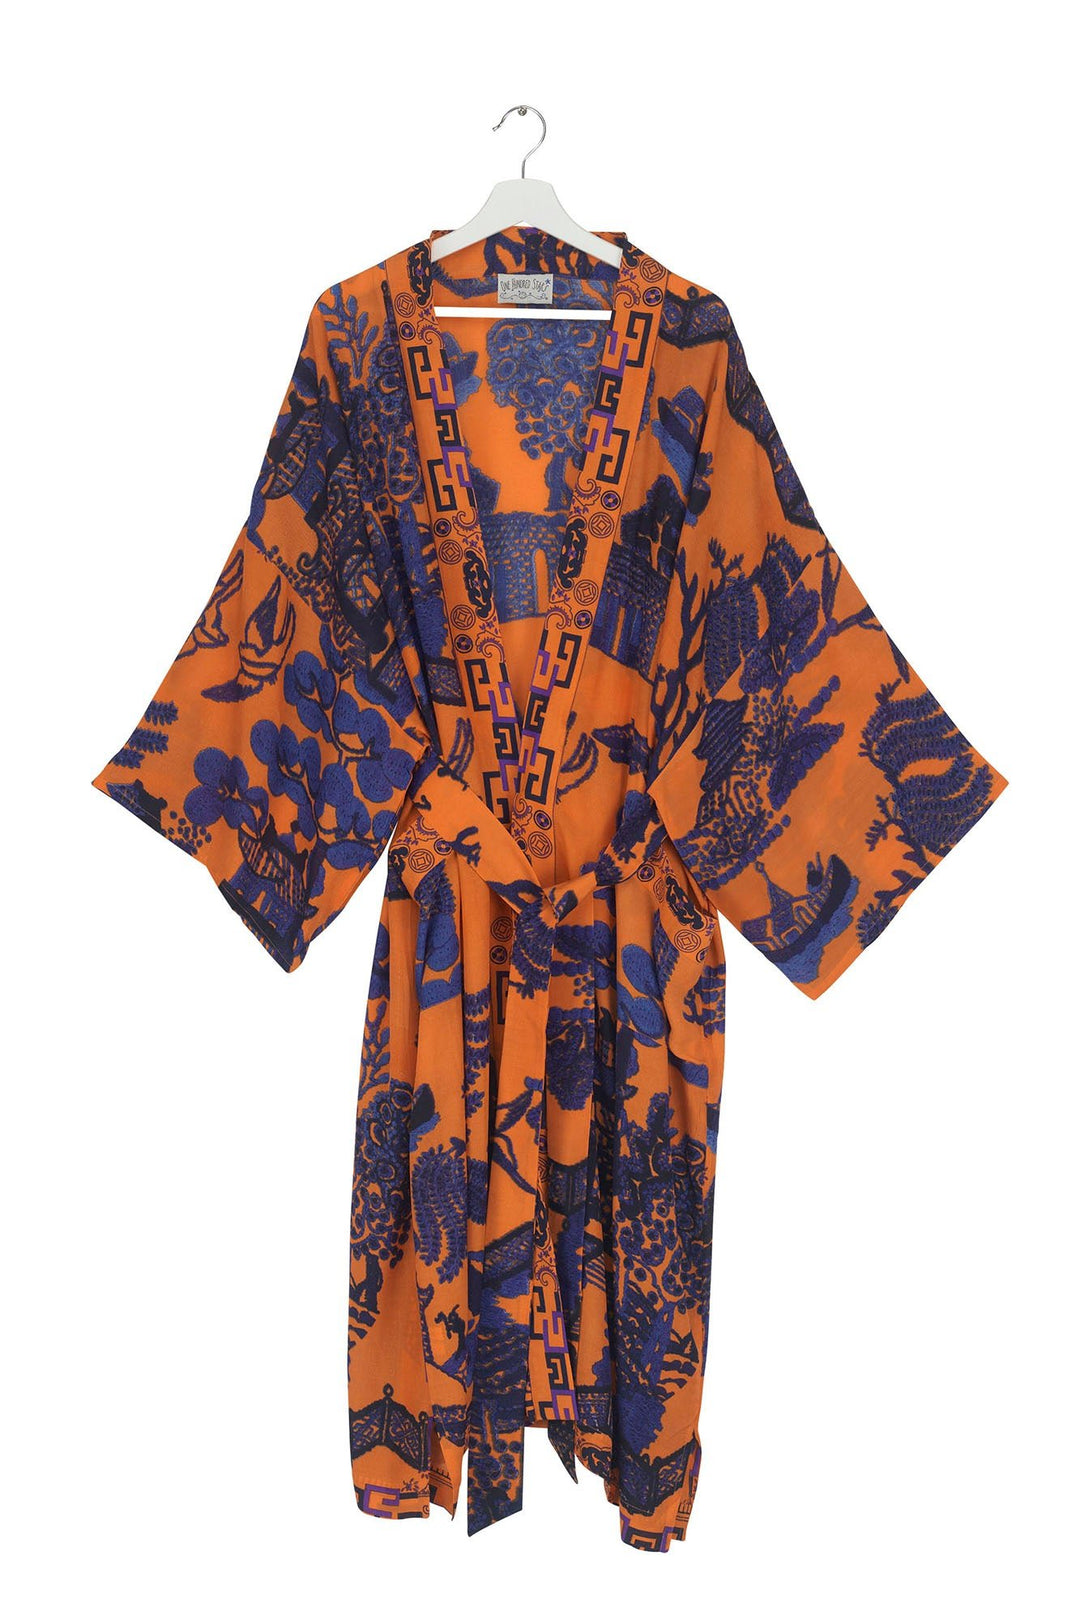 Giant Willow Orange Crepe Long Kimono - One Hundred Stars